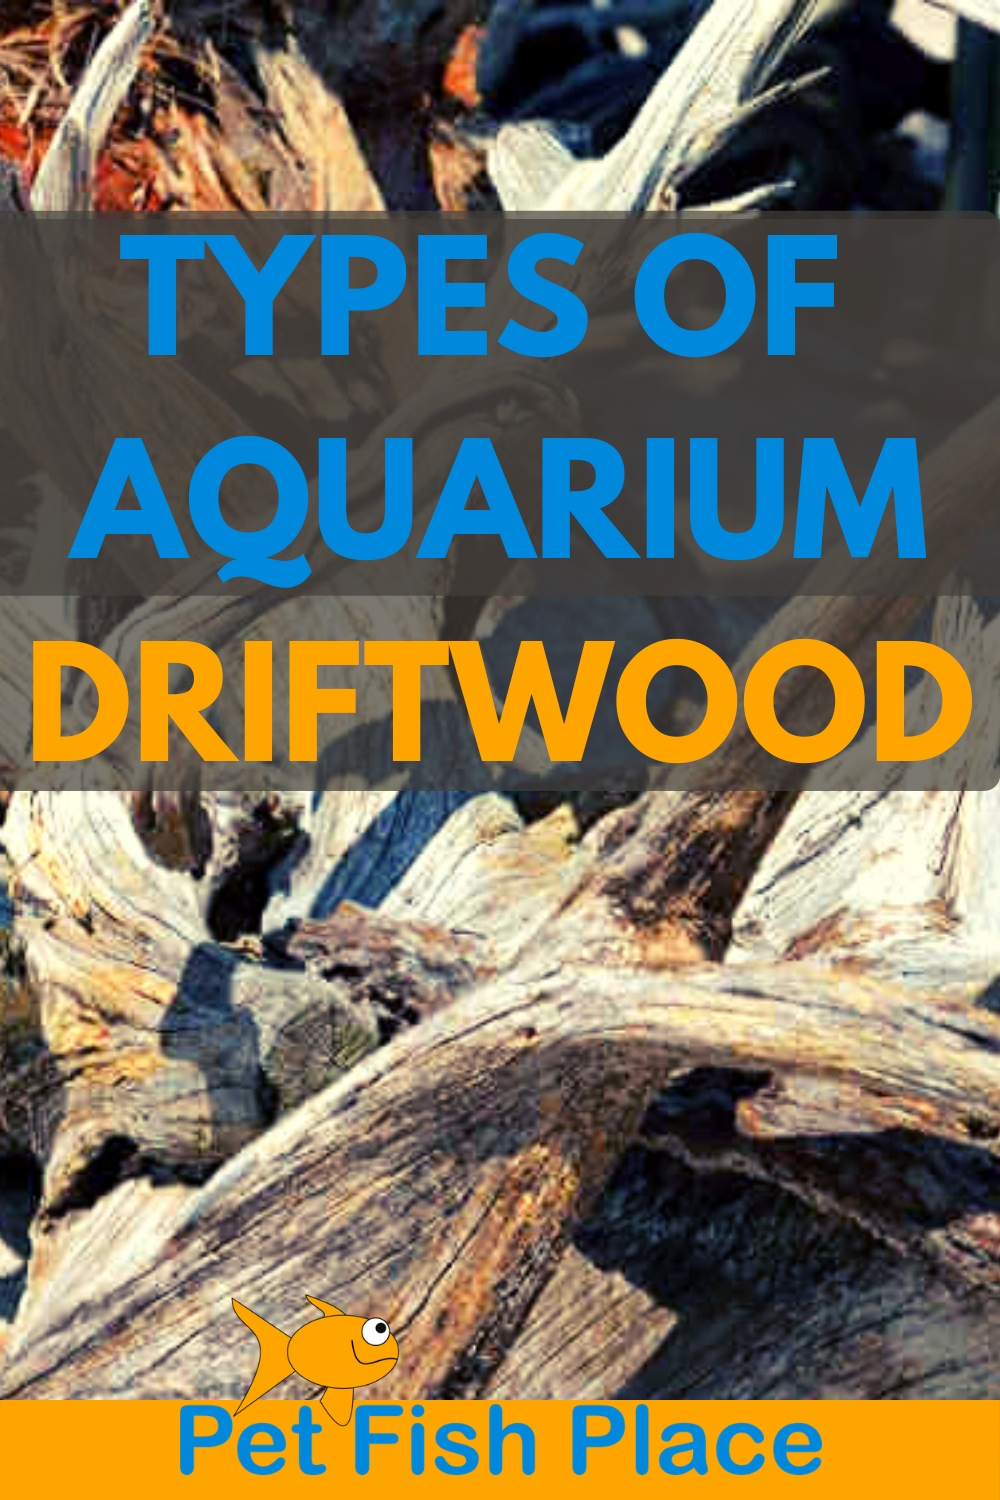 Types of aquarium driftwood Pinterest